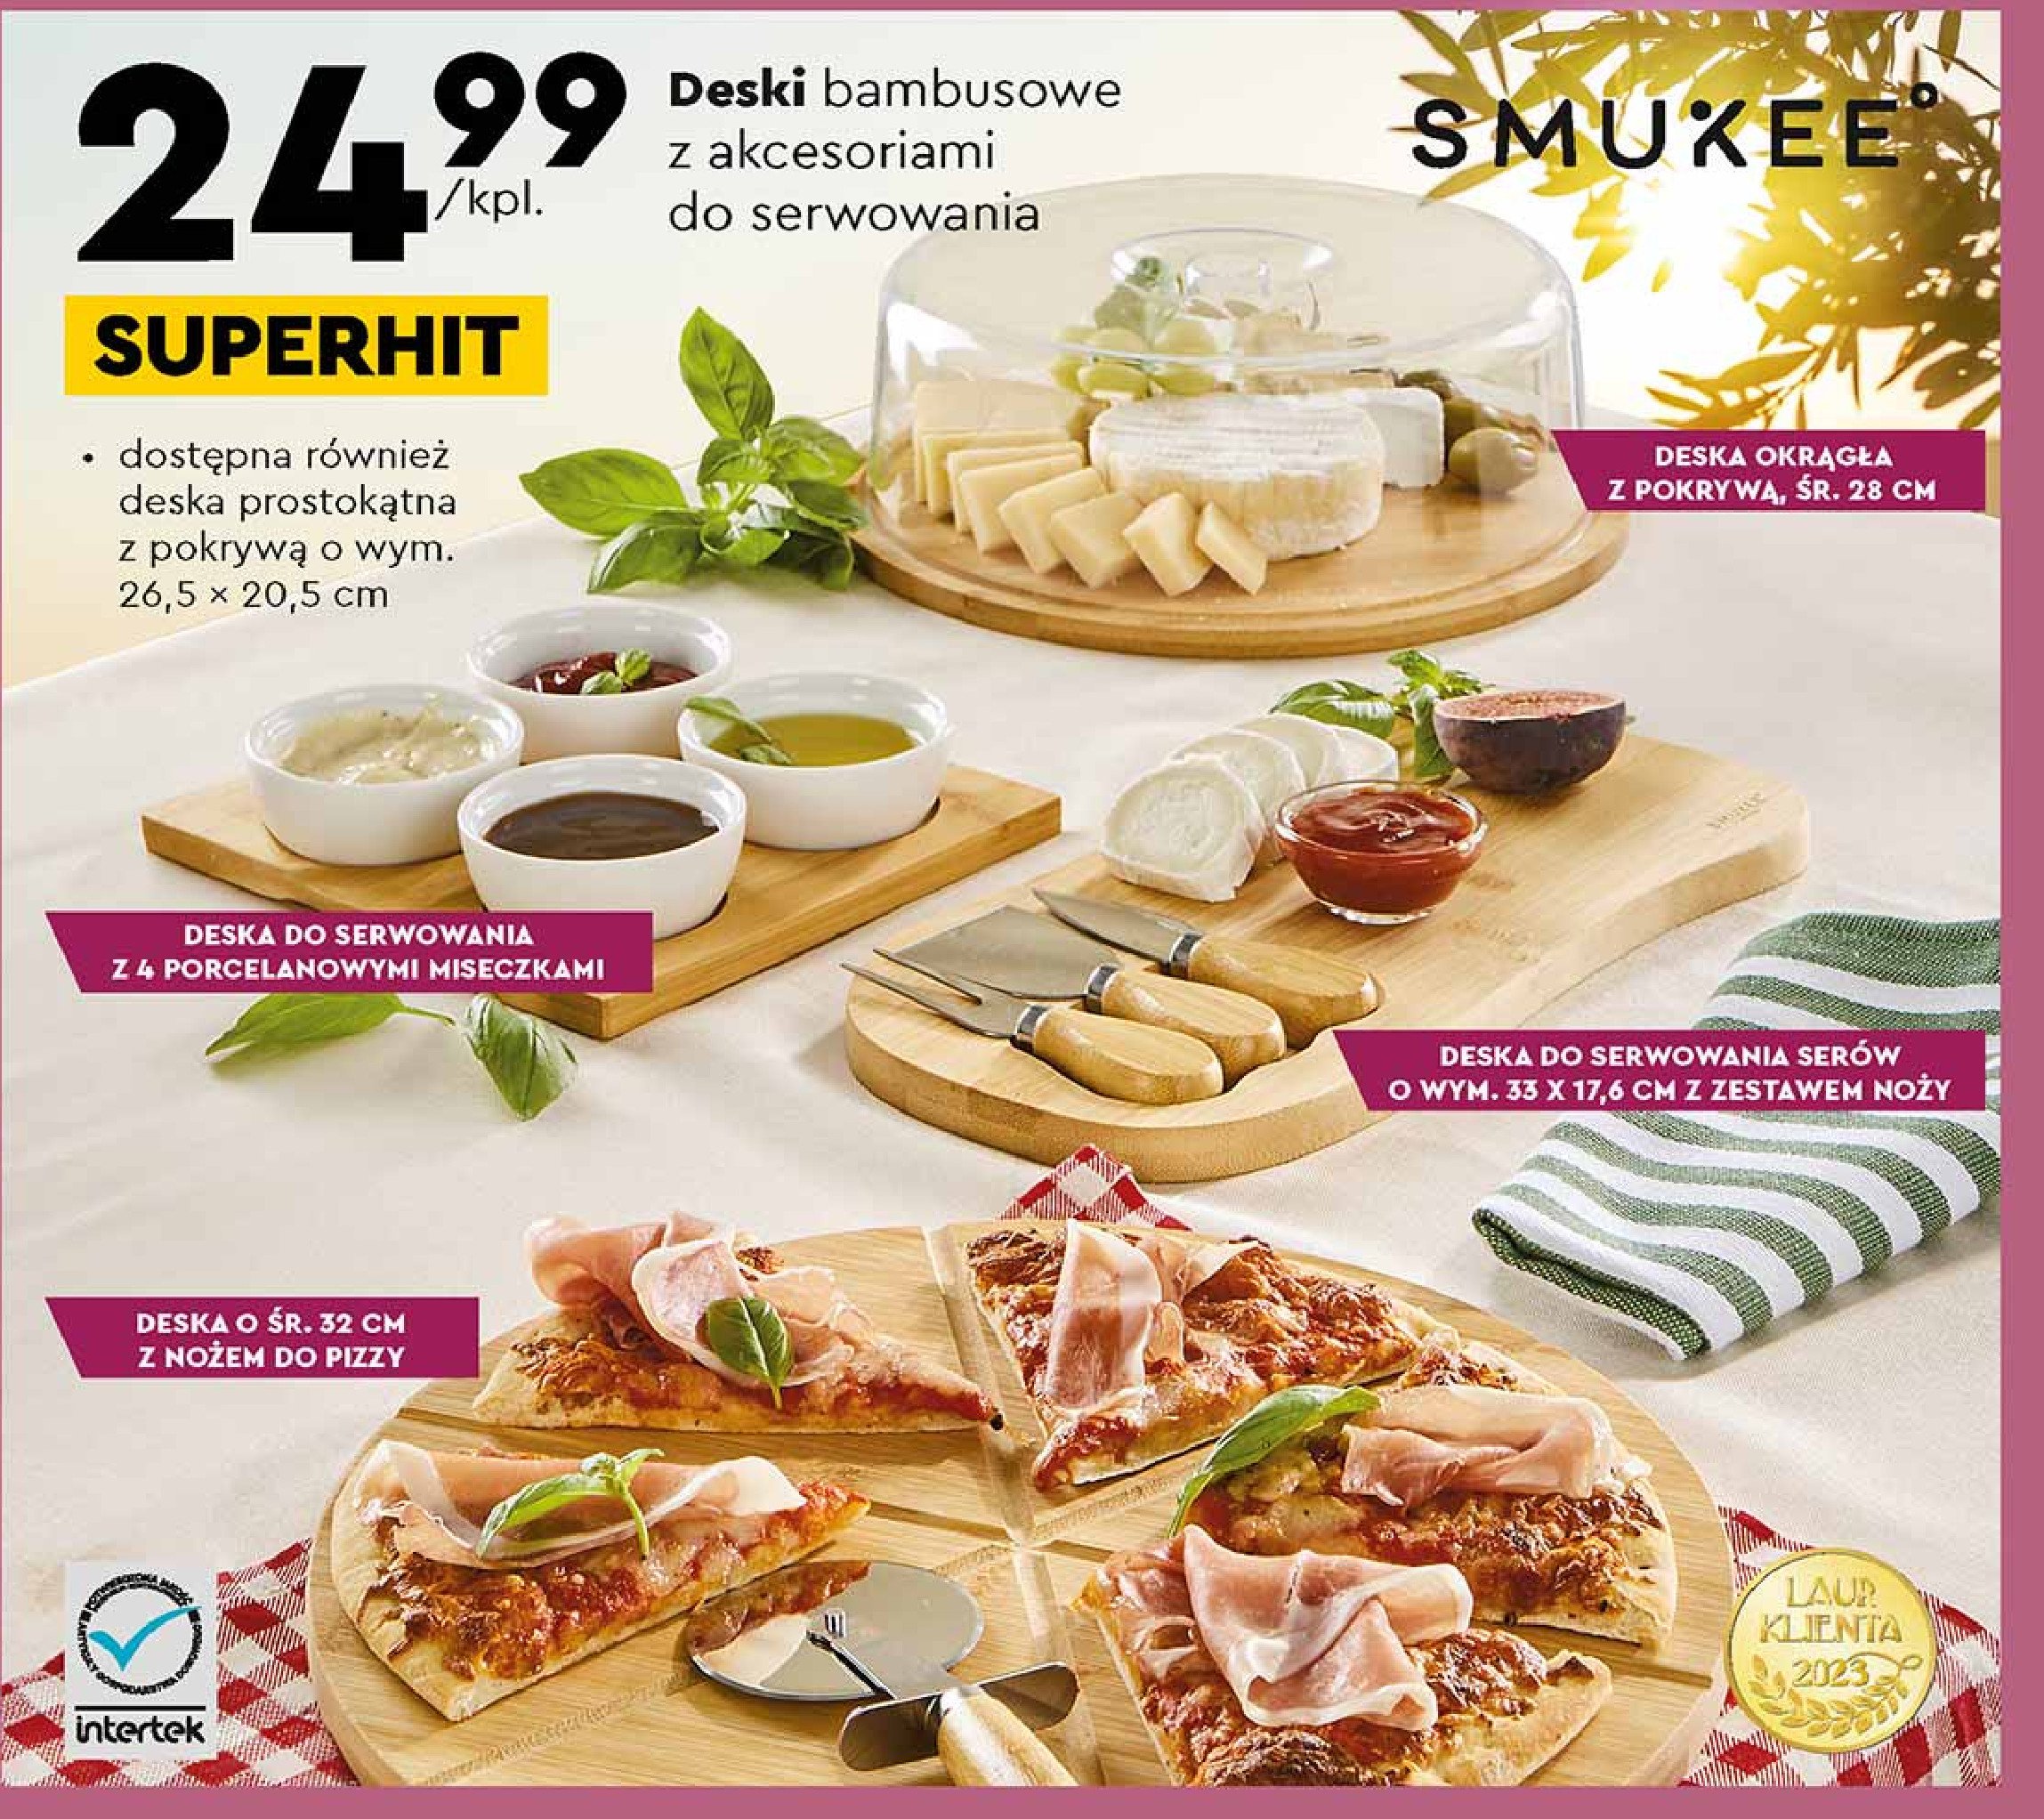 Deska bambusowa z nożem do pizzy Smukee kitchen promocja